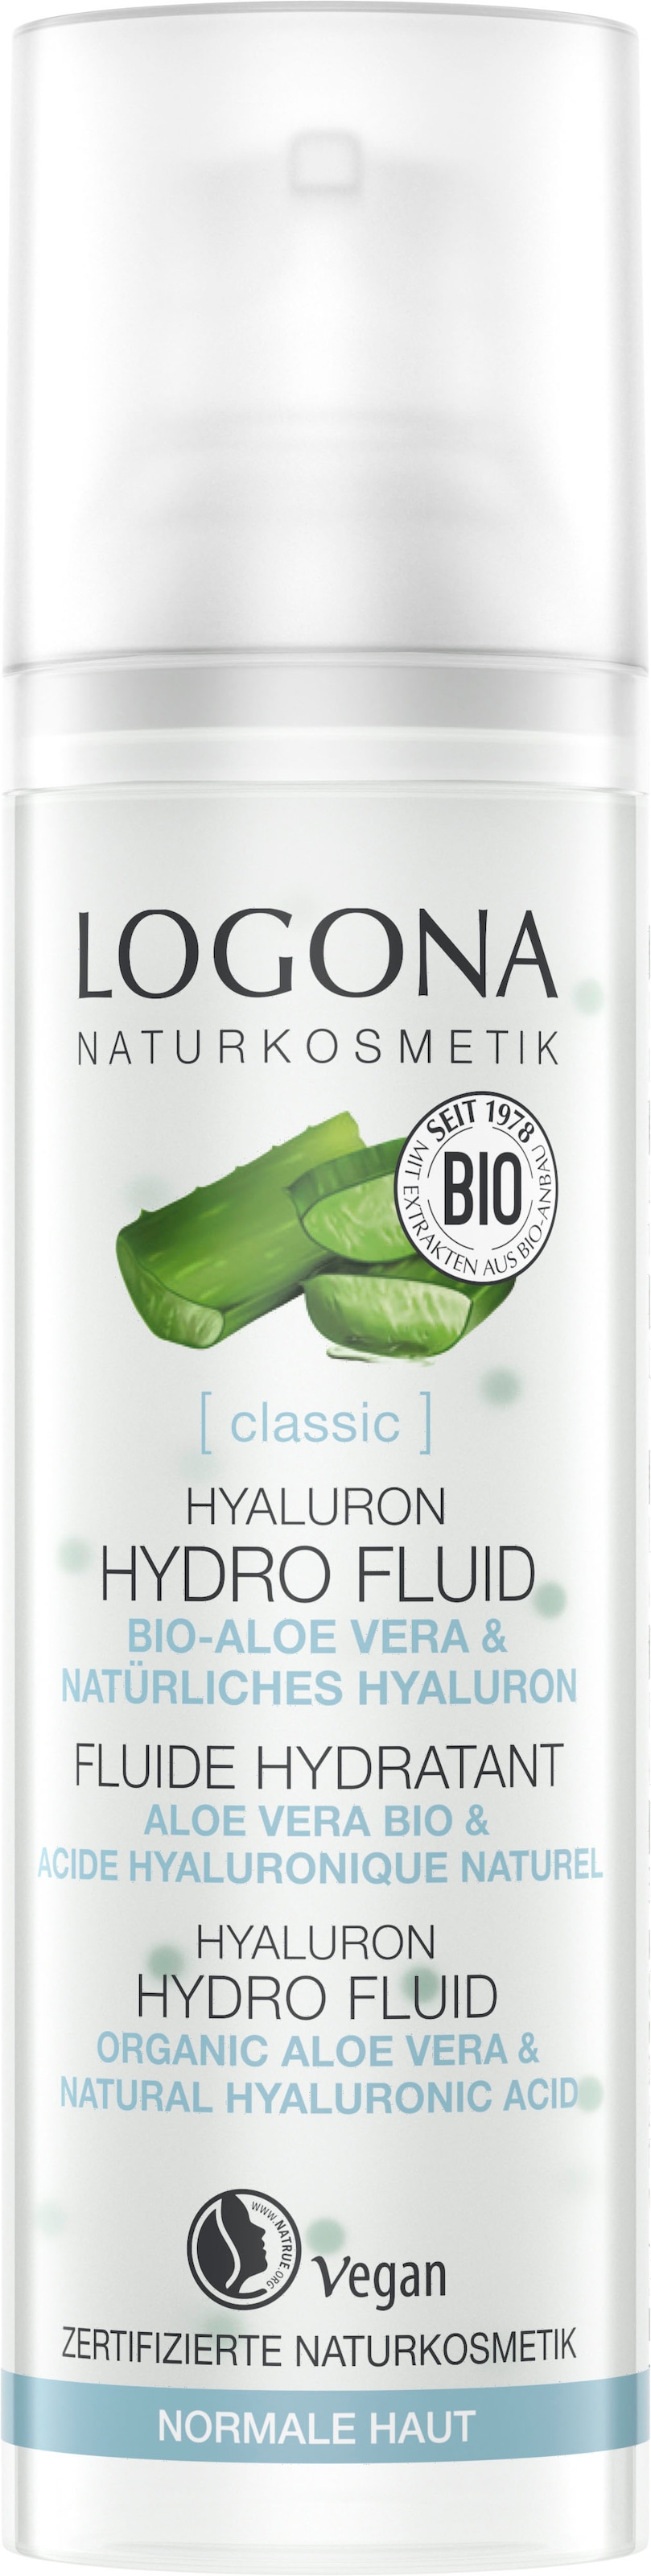 LOGONA Gesichtsfluid »Logona classic Hyaluron Fluid« Hydro ♕ bei